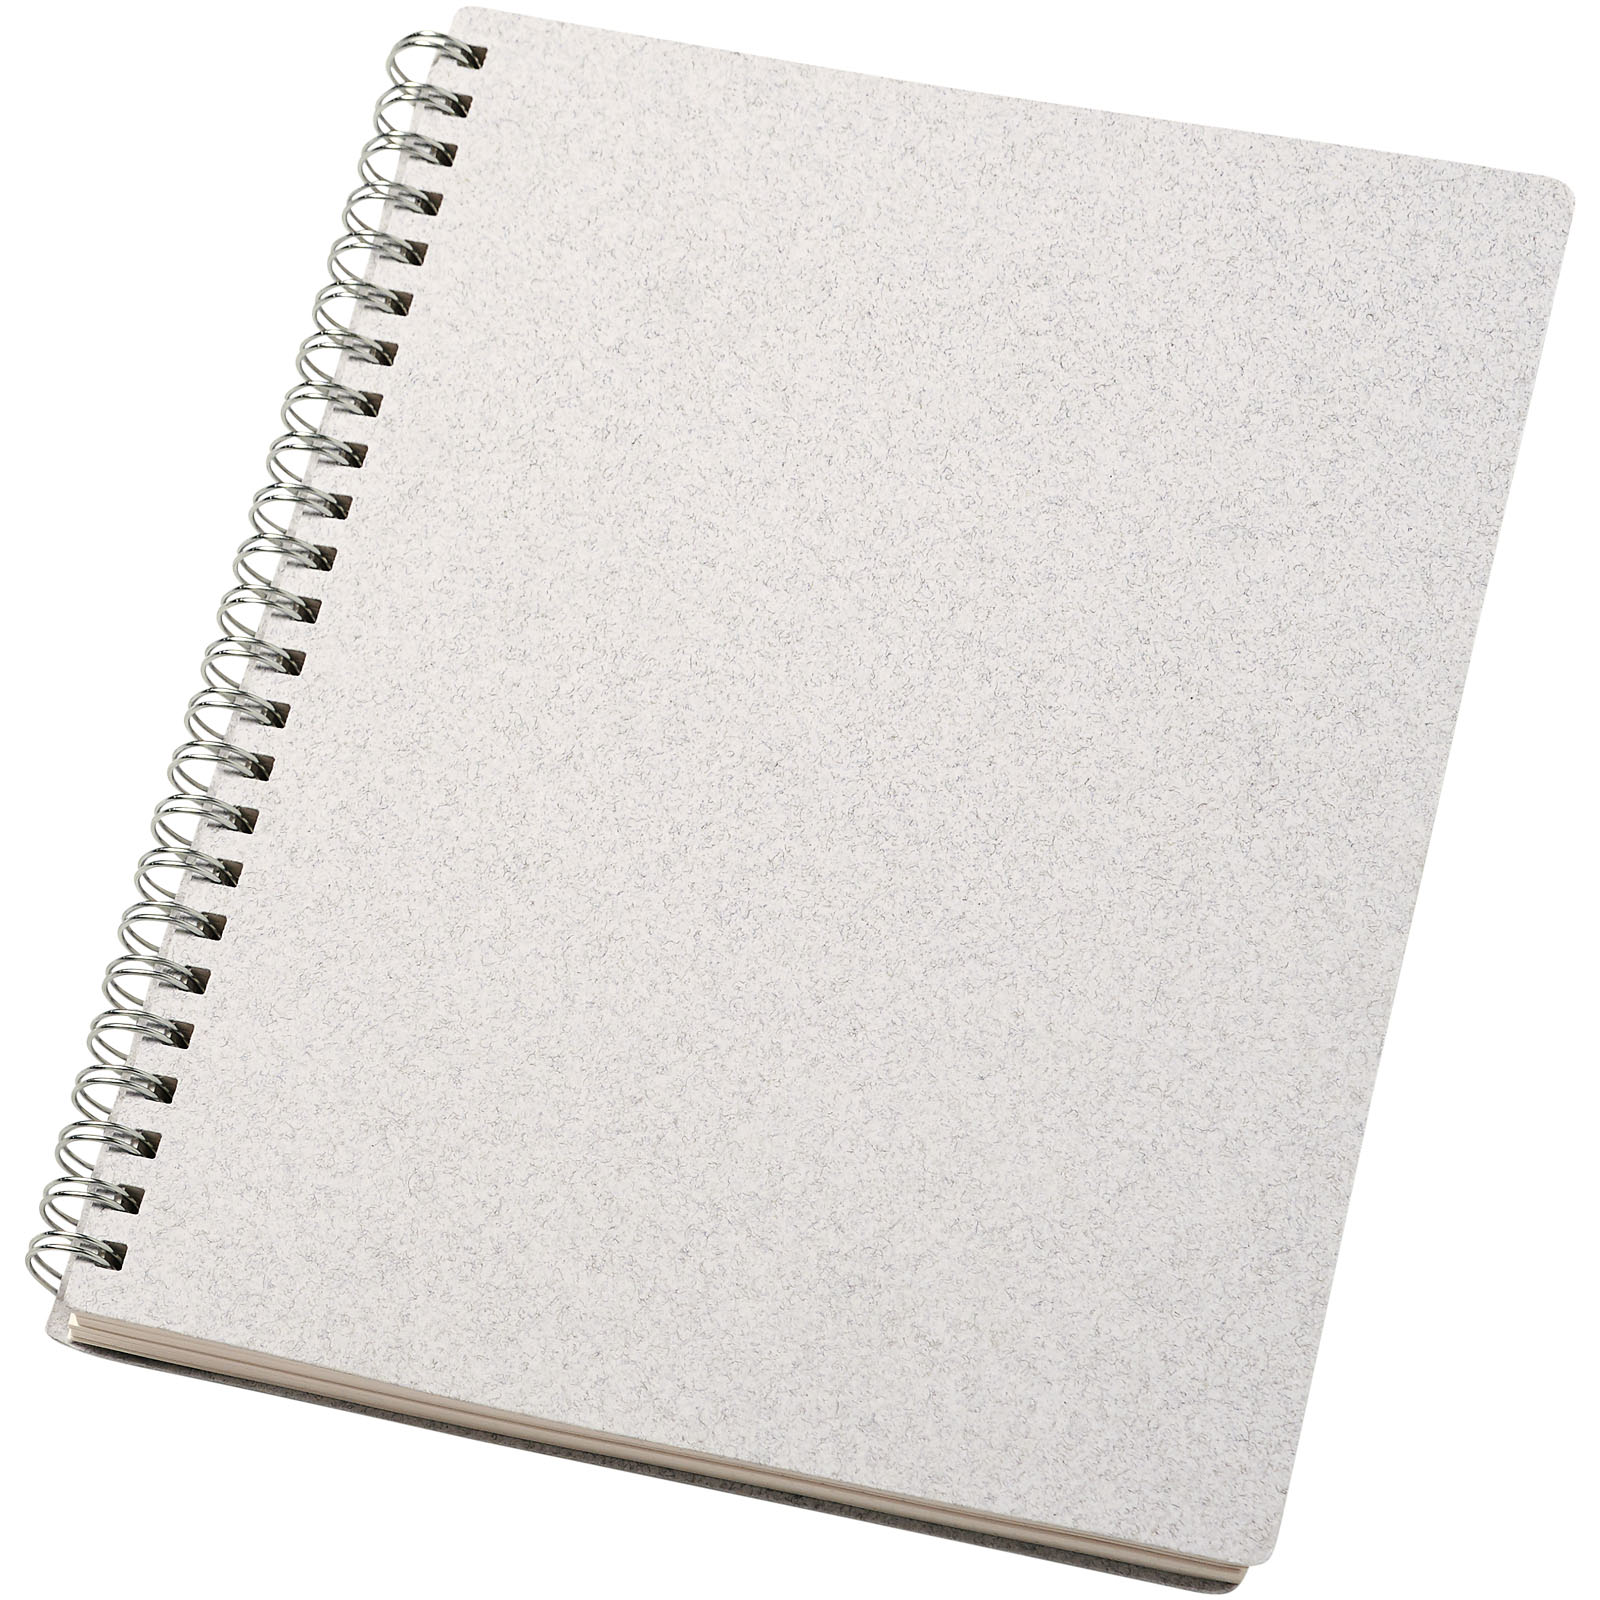 Notebooks - Bianco A5 size wire-o notebook